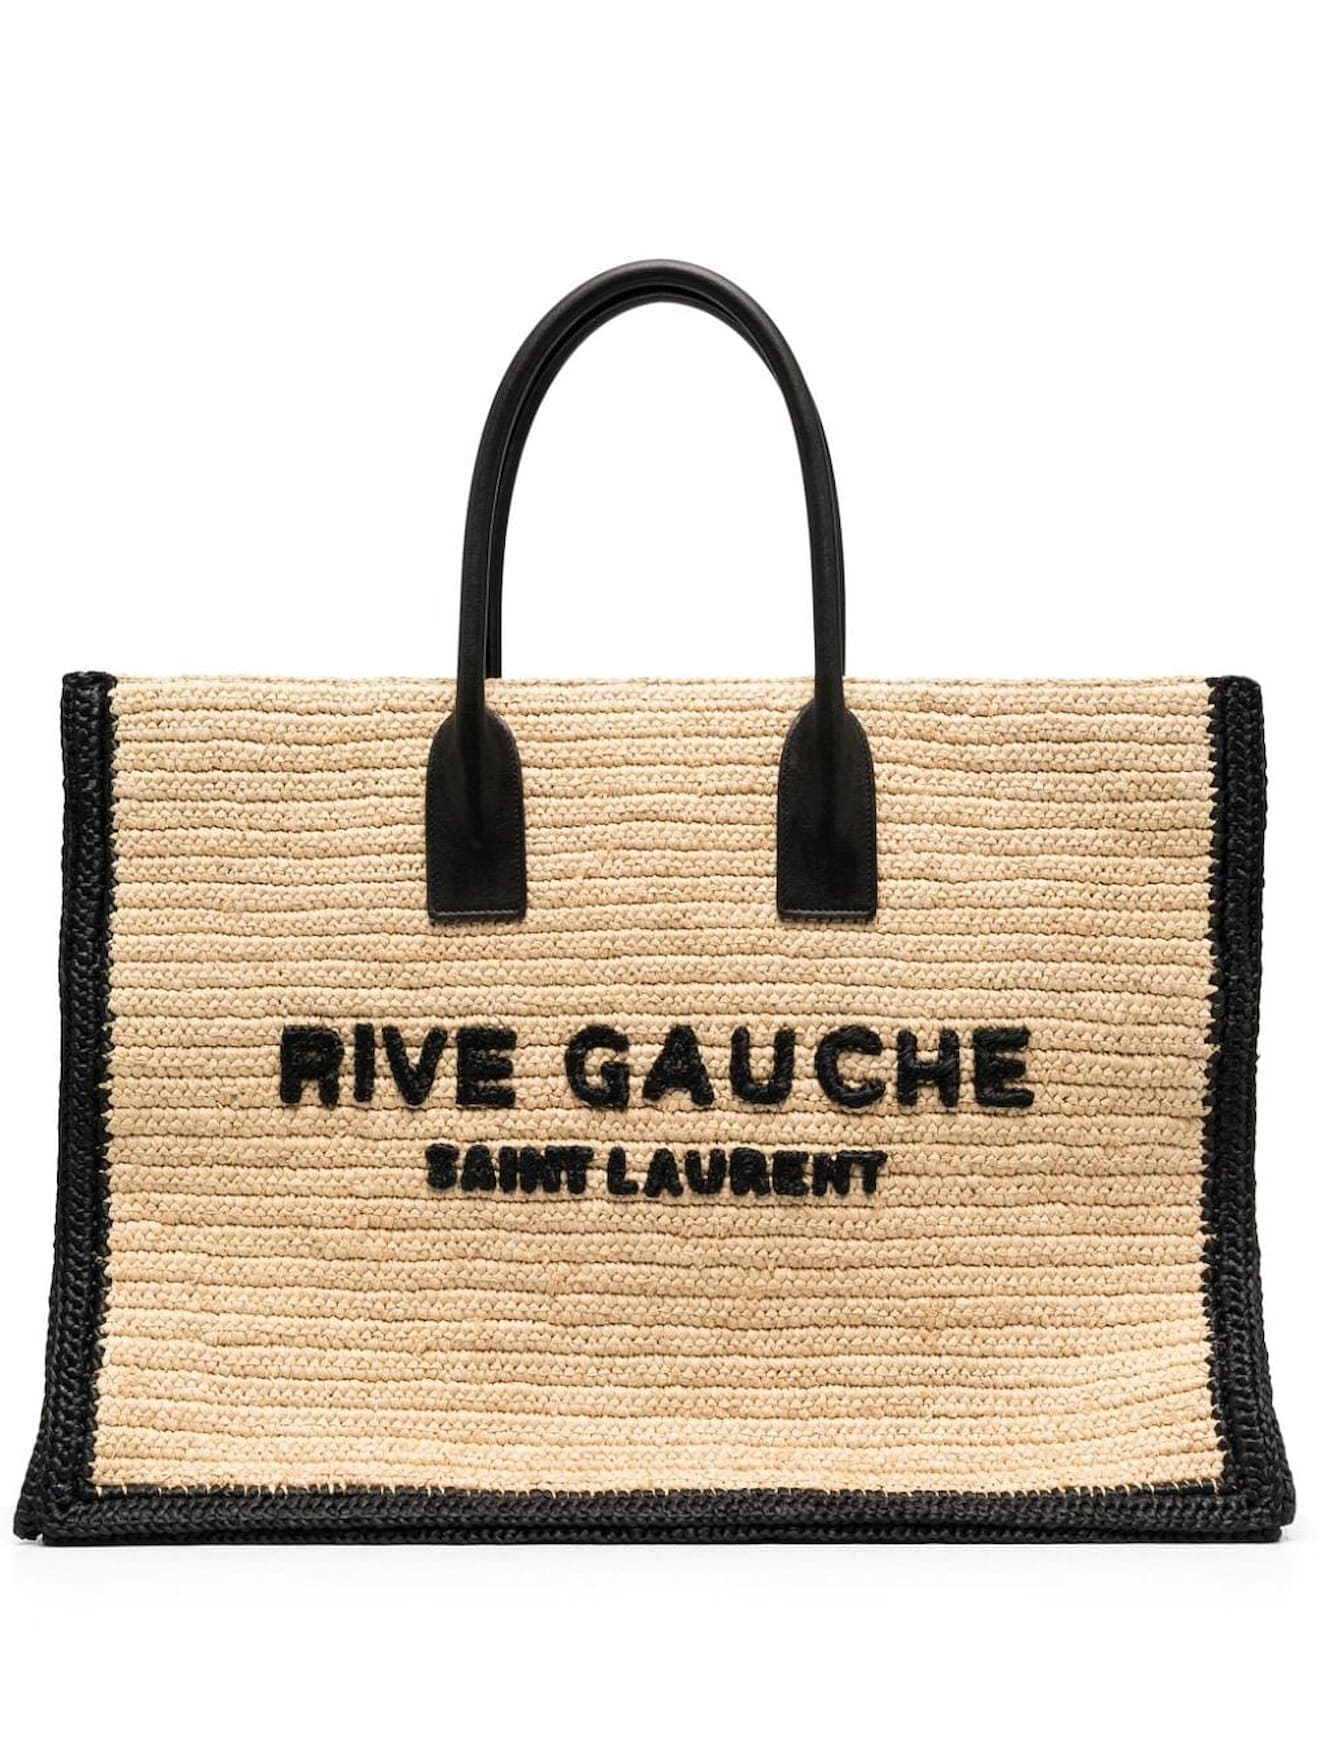 Saint Laurent Rive Gauche raffia tote bag neutrals | MODES